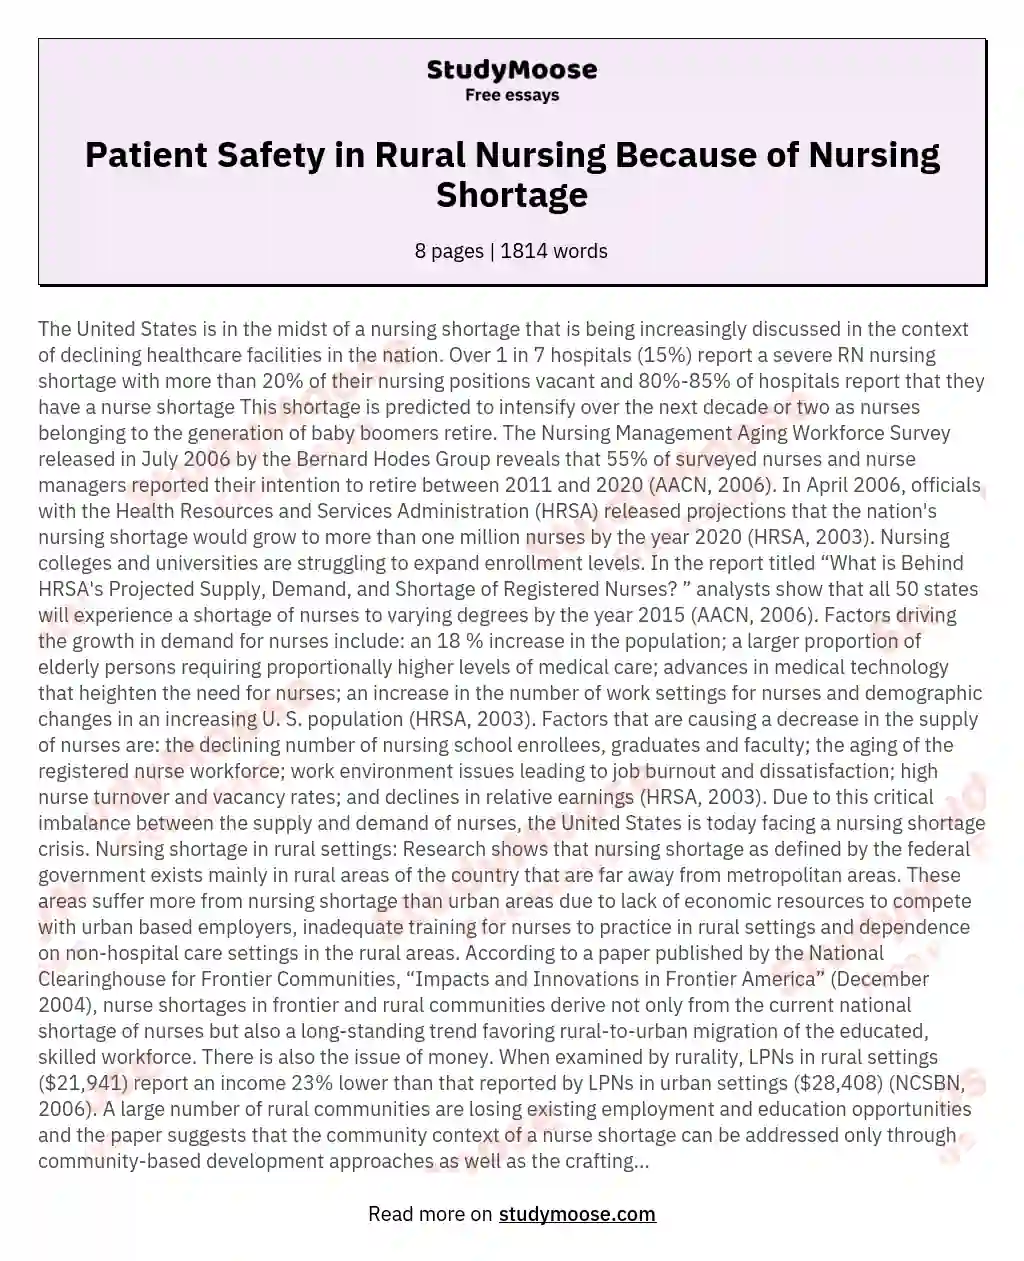 Patient Safety in Rural Nursing Because of Nursing Shortage essay